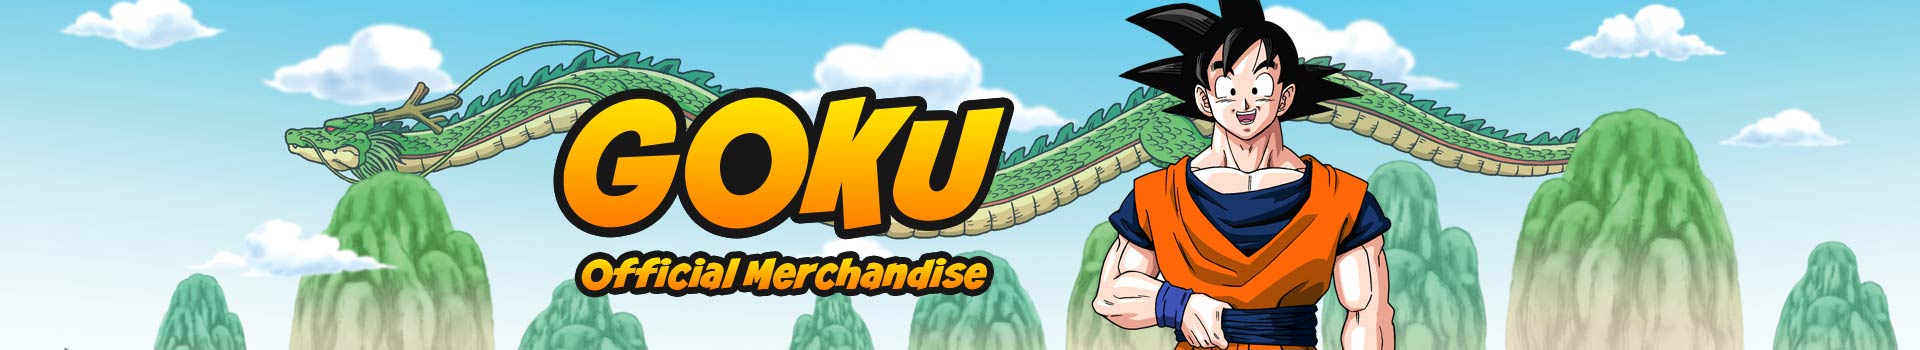 Goku - Official Merchandise 